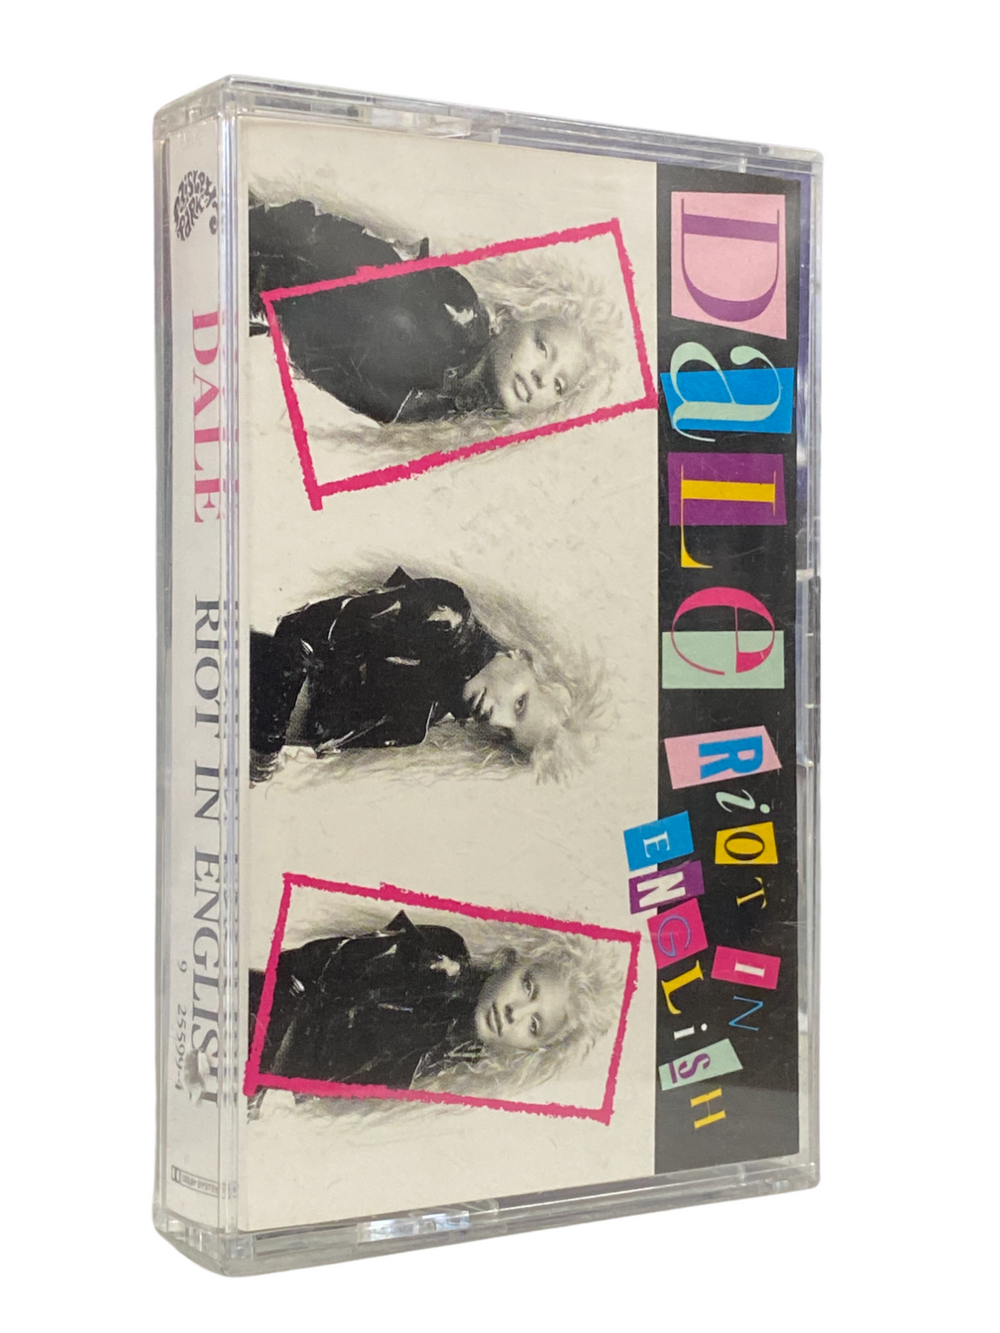 Dale Riot In English Original Cassette Tape USA 1988 Release Prince